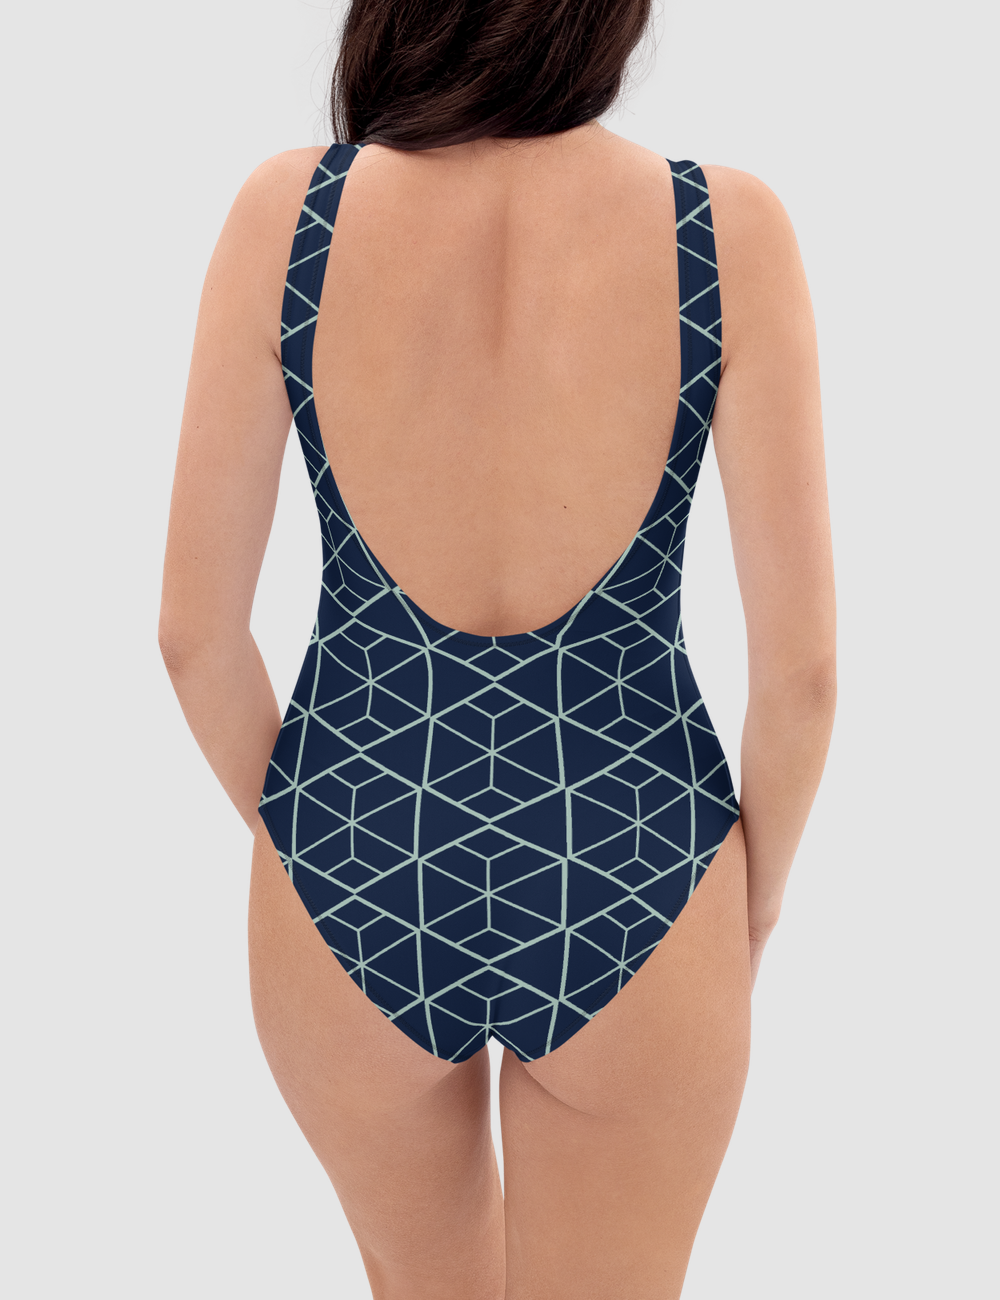 Tessellated Hexagon | Women's One-Piece Swimsuit OniTakai